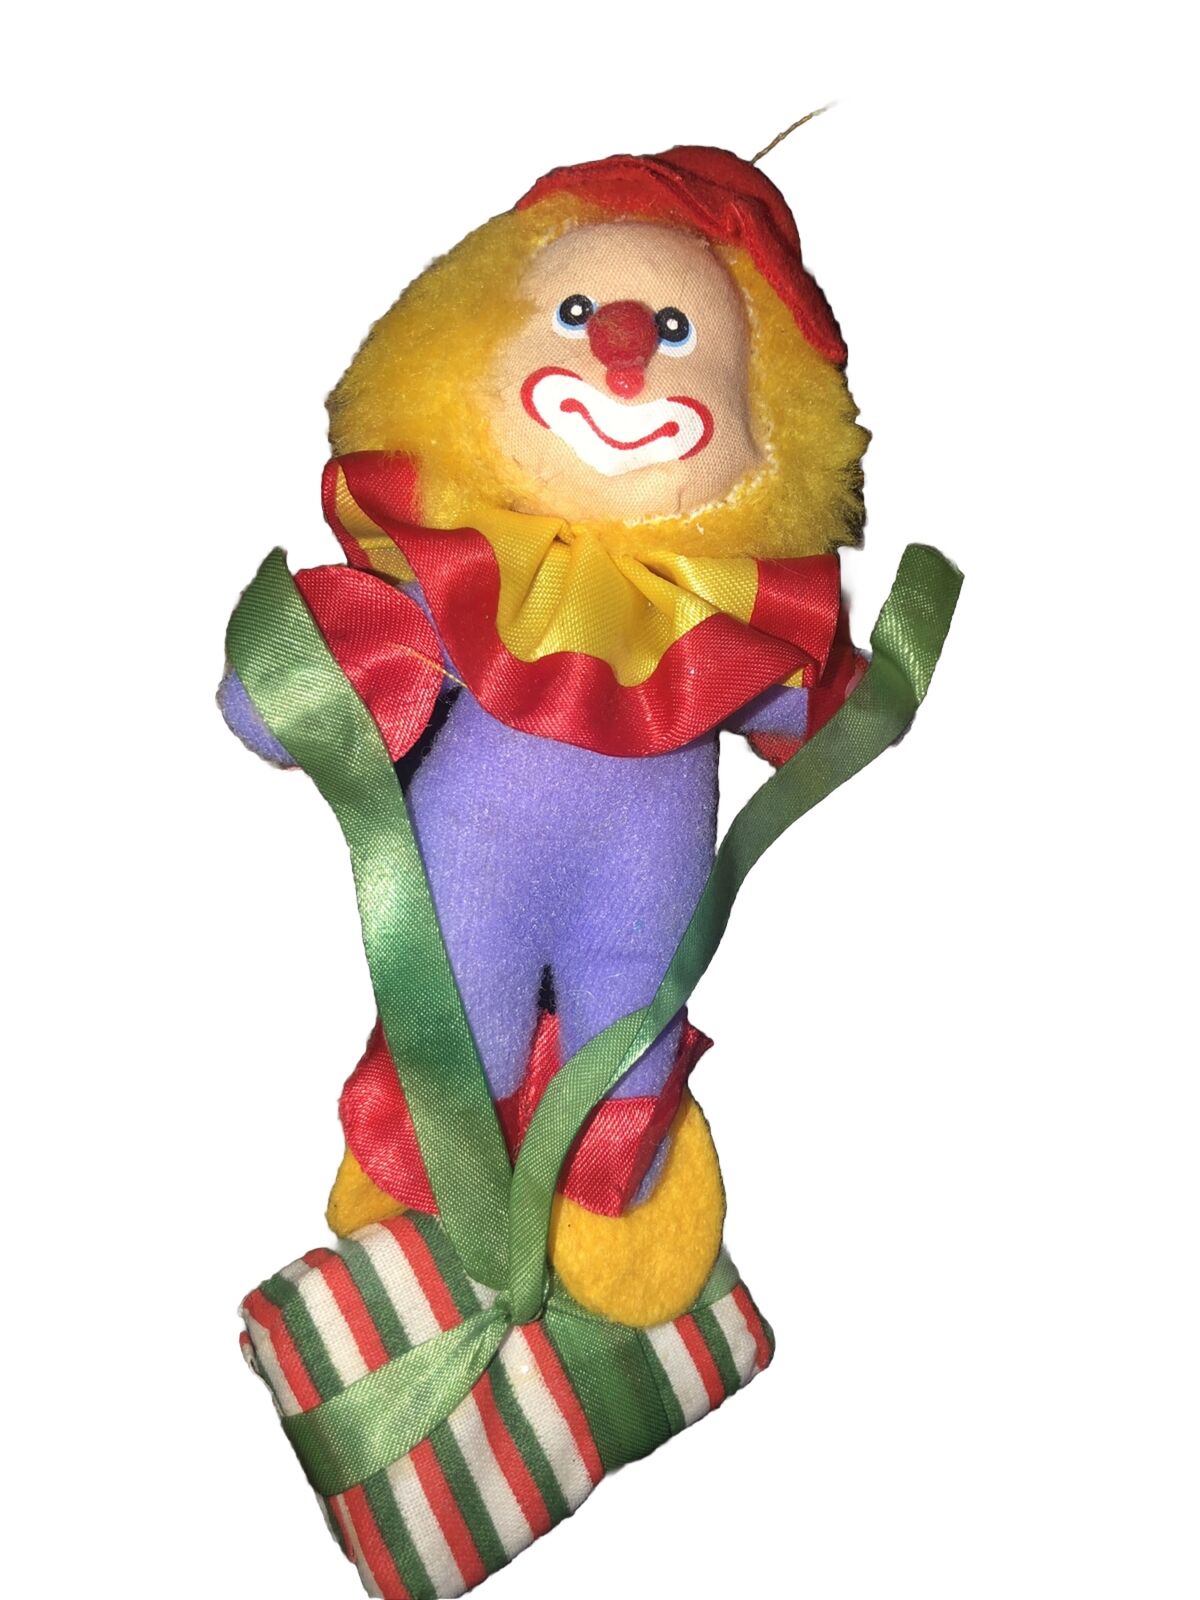 Vintage Japan Jester Clown Christmas Ornaments